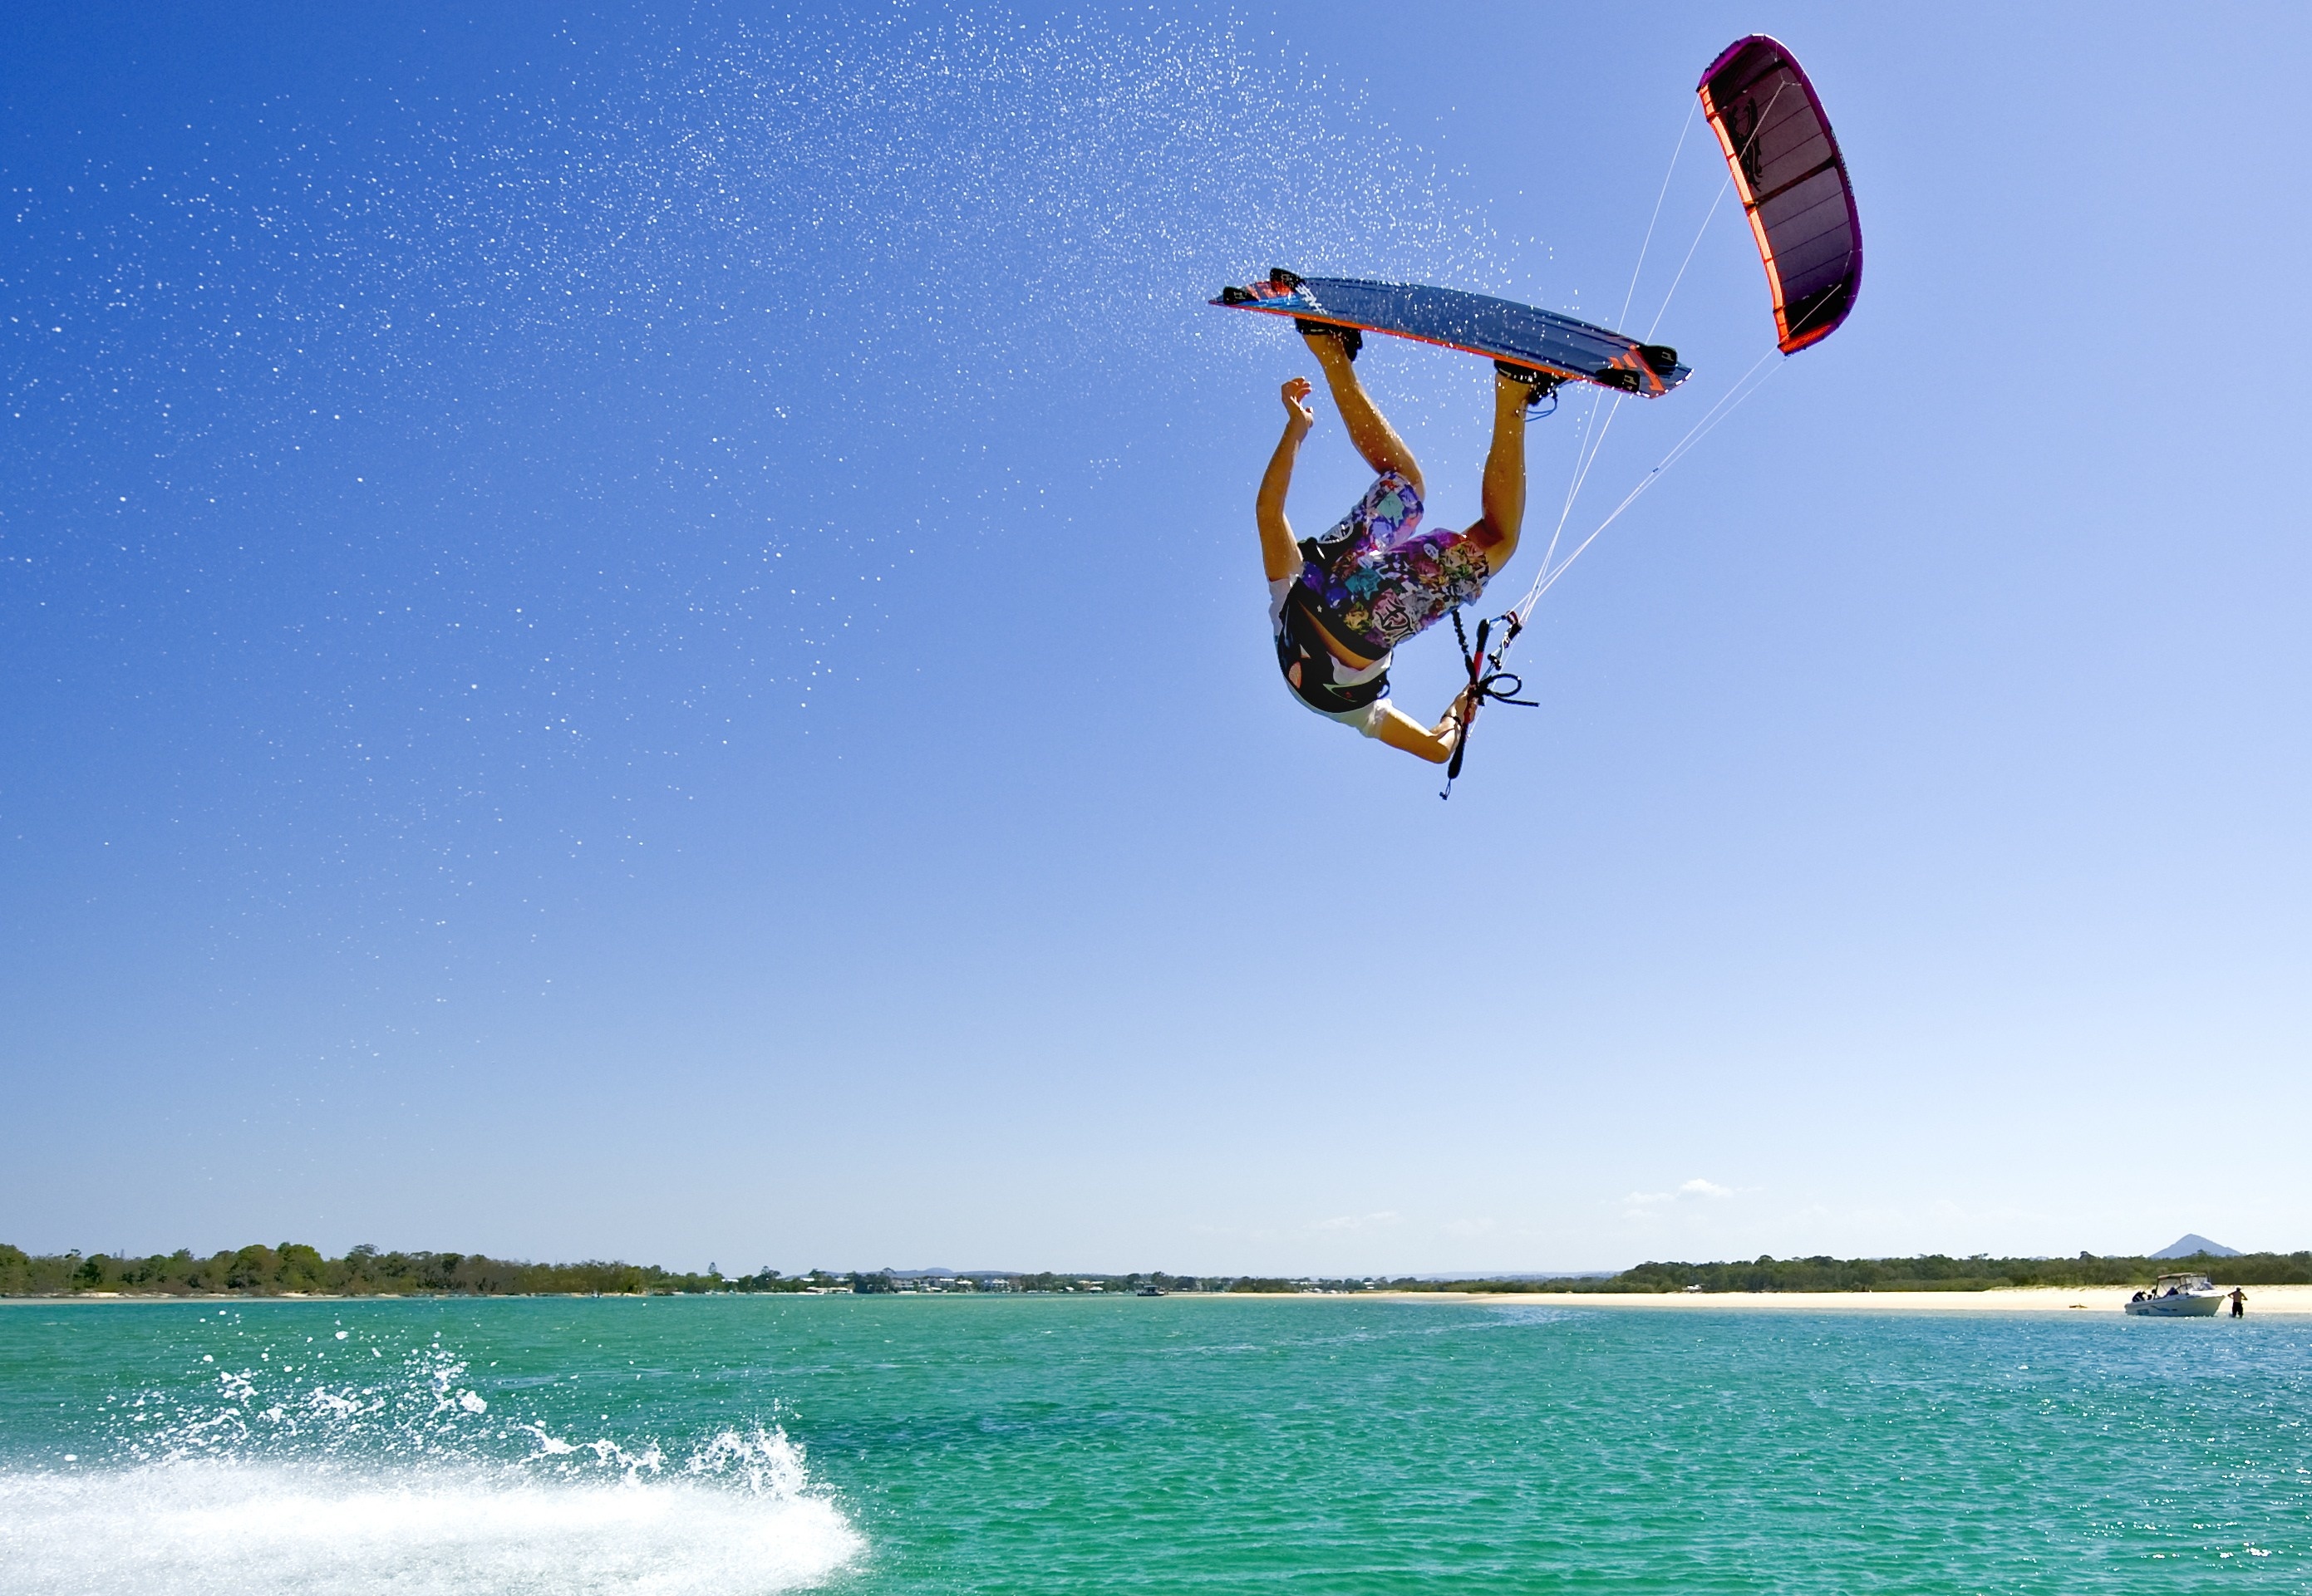 Kiteboarding: Modern-day kitesurfing, A surfboard, Equipment used for riding waves. 2790x1930 HD Wallpaper.